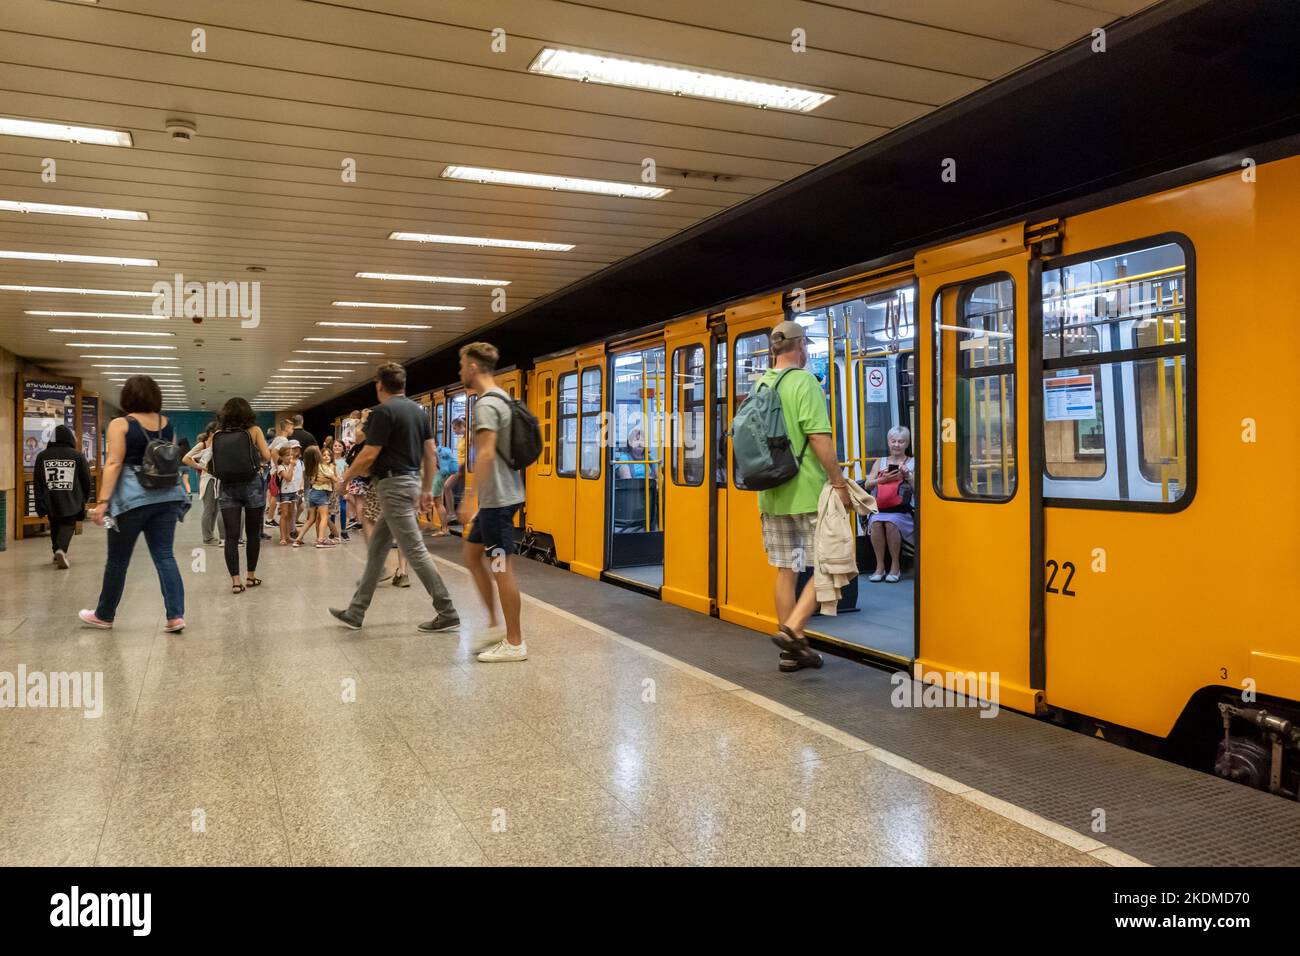 Budapest, Hungary - 3 September 2022: Passengers boarding the yellow train wagons of Budapest subway Stock Photo